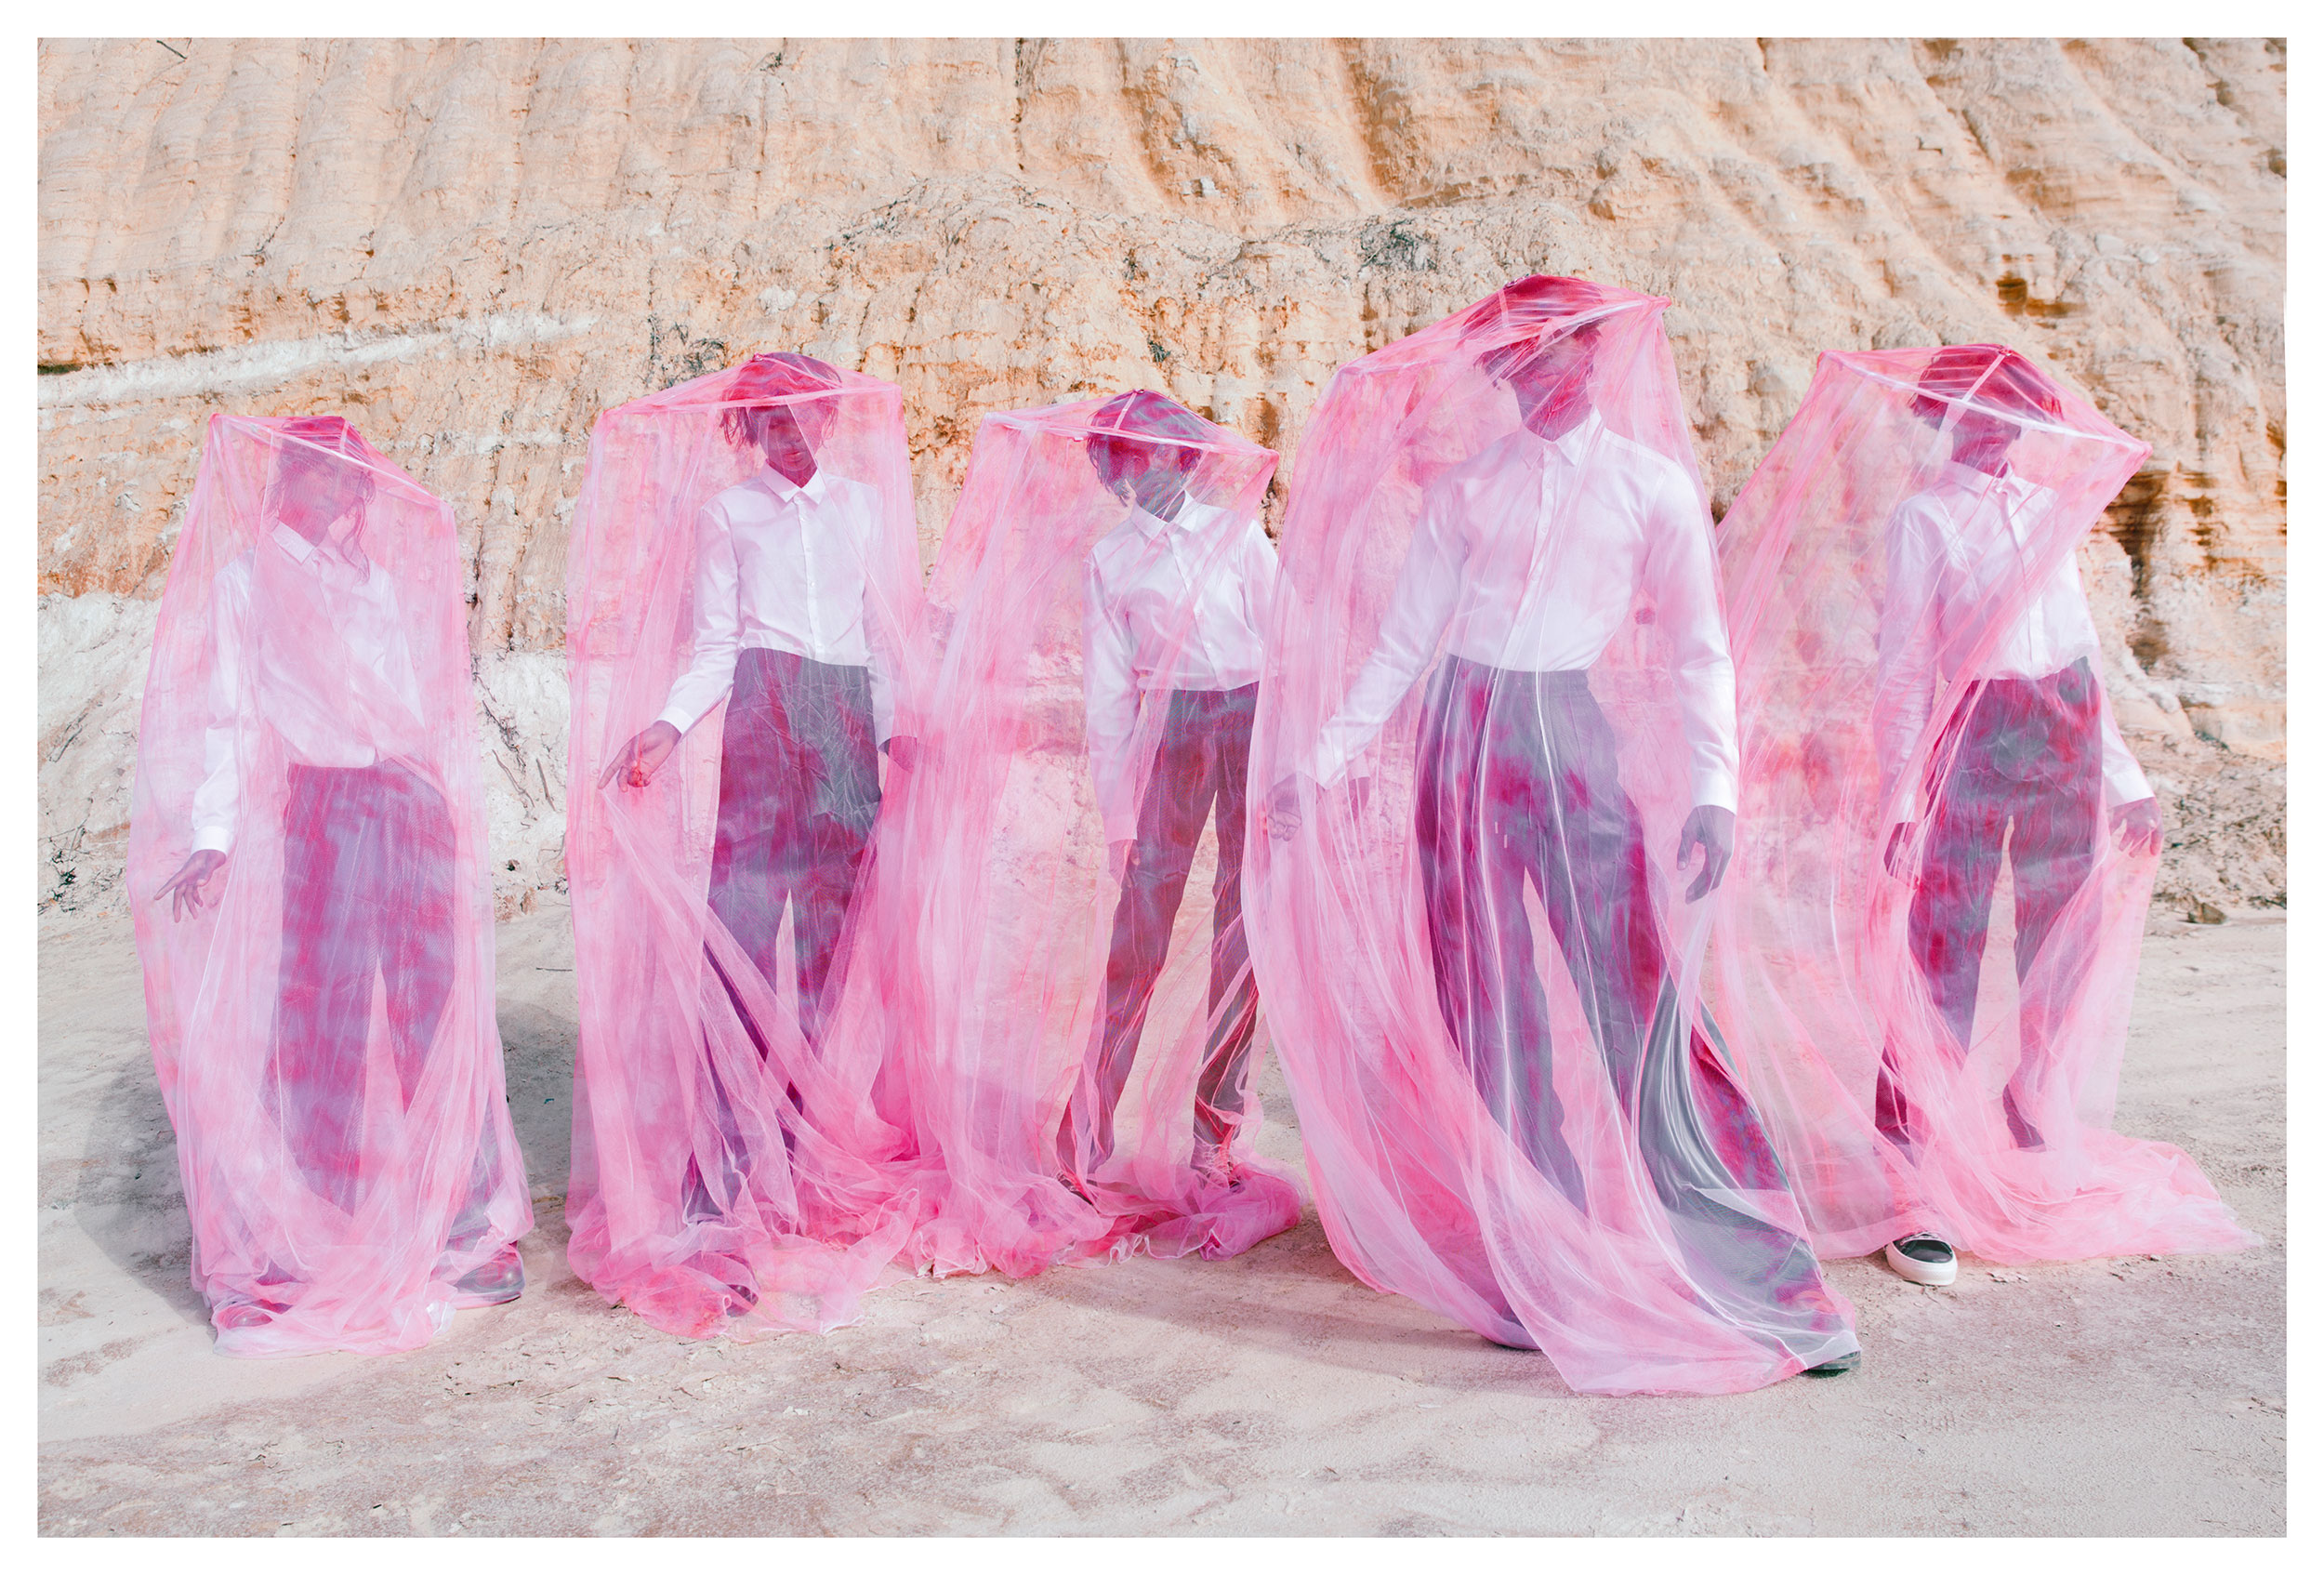 Fantasy meets dystopian fashion in the latest photo series from Ib Kamara  and Kristin-Lee Moolman